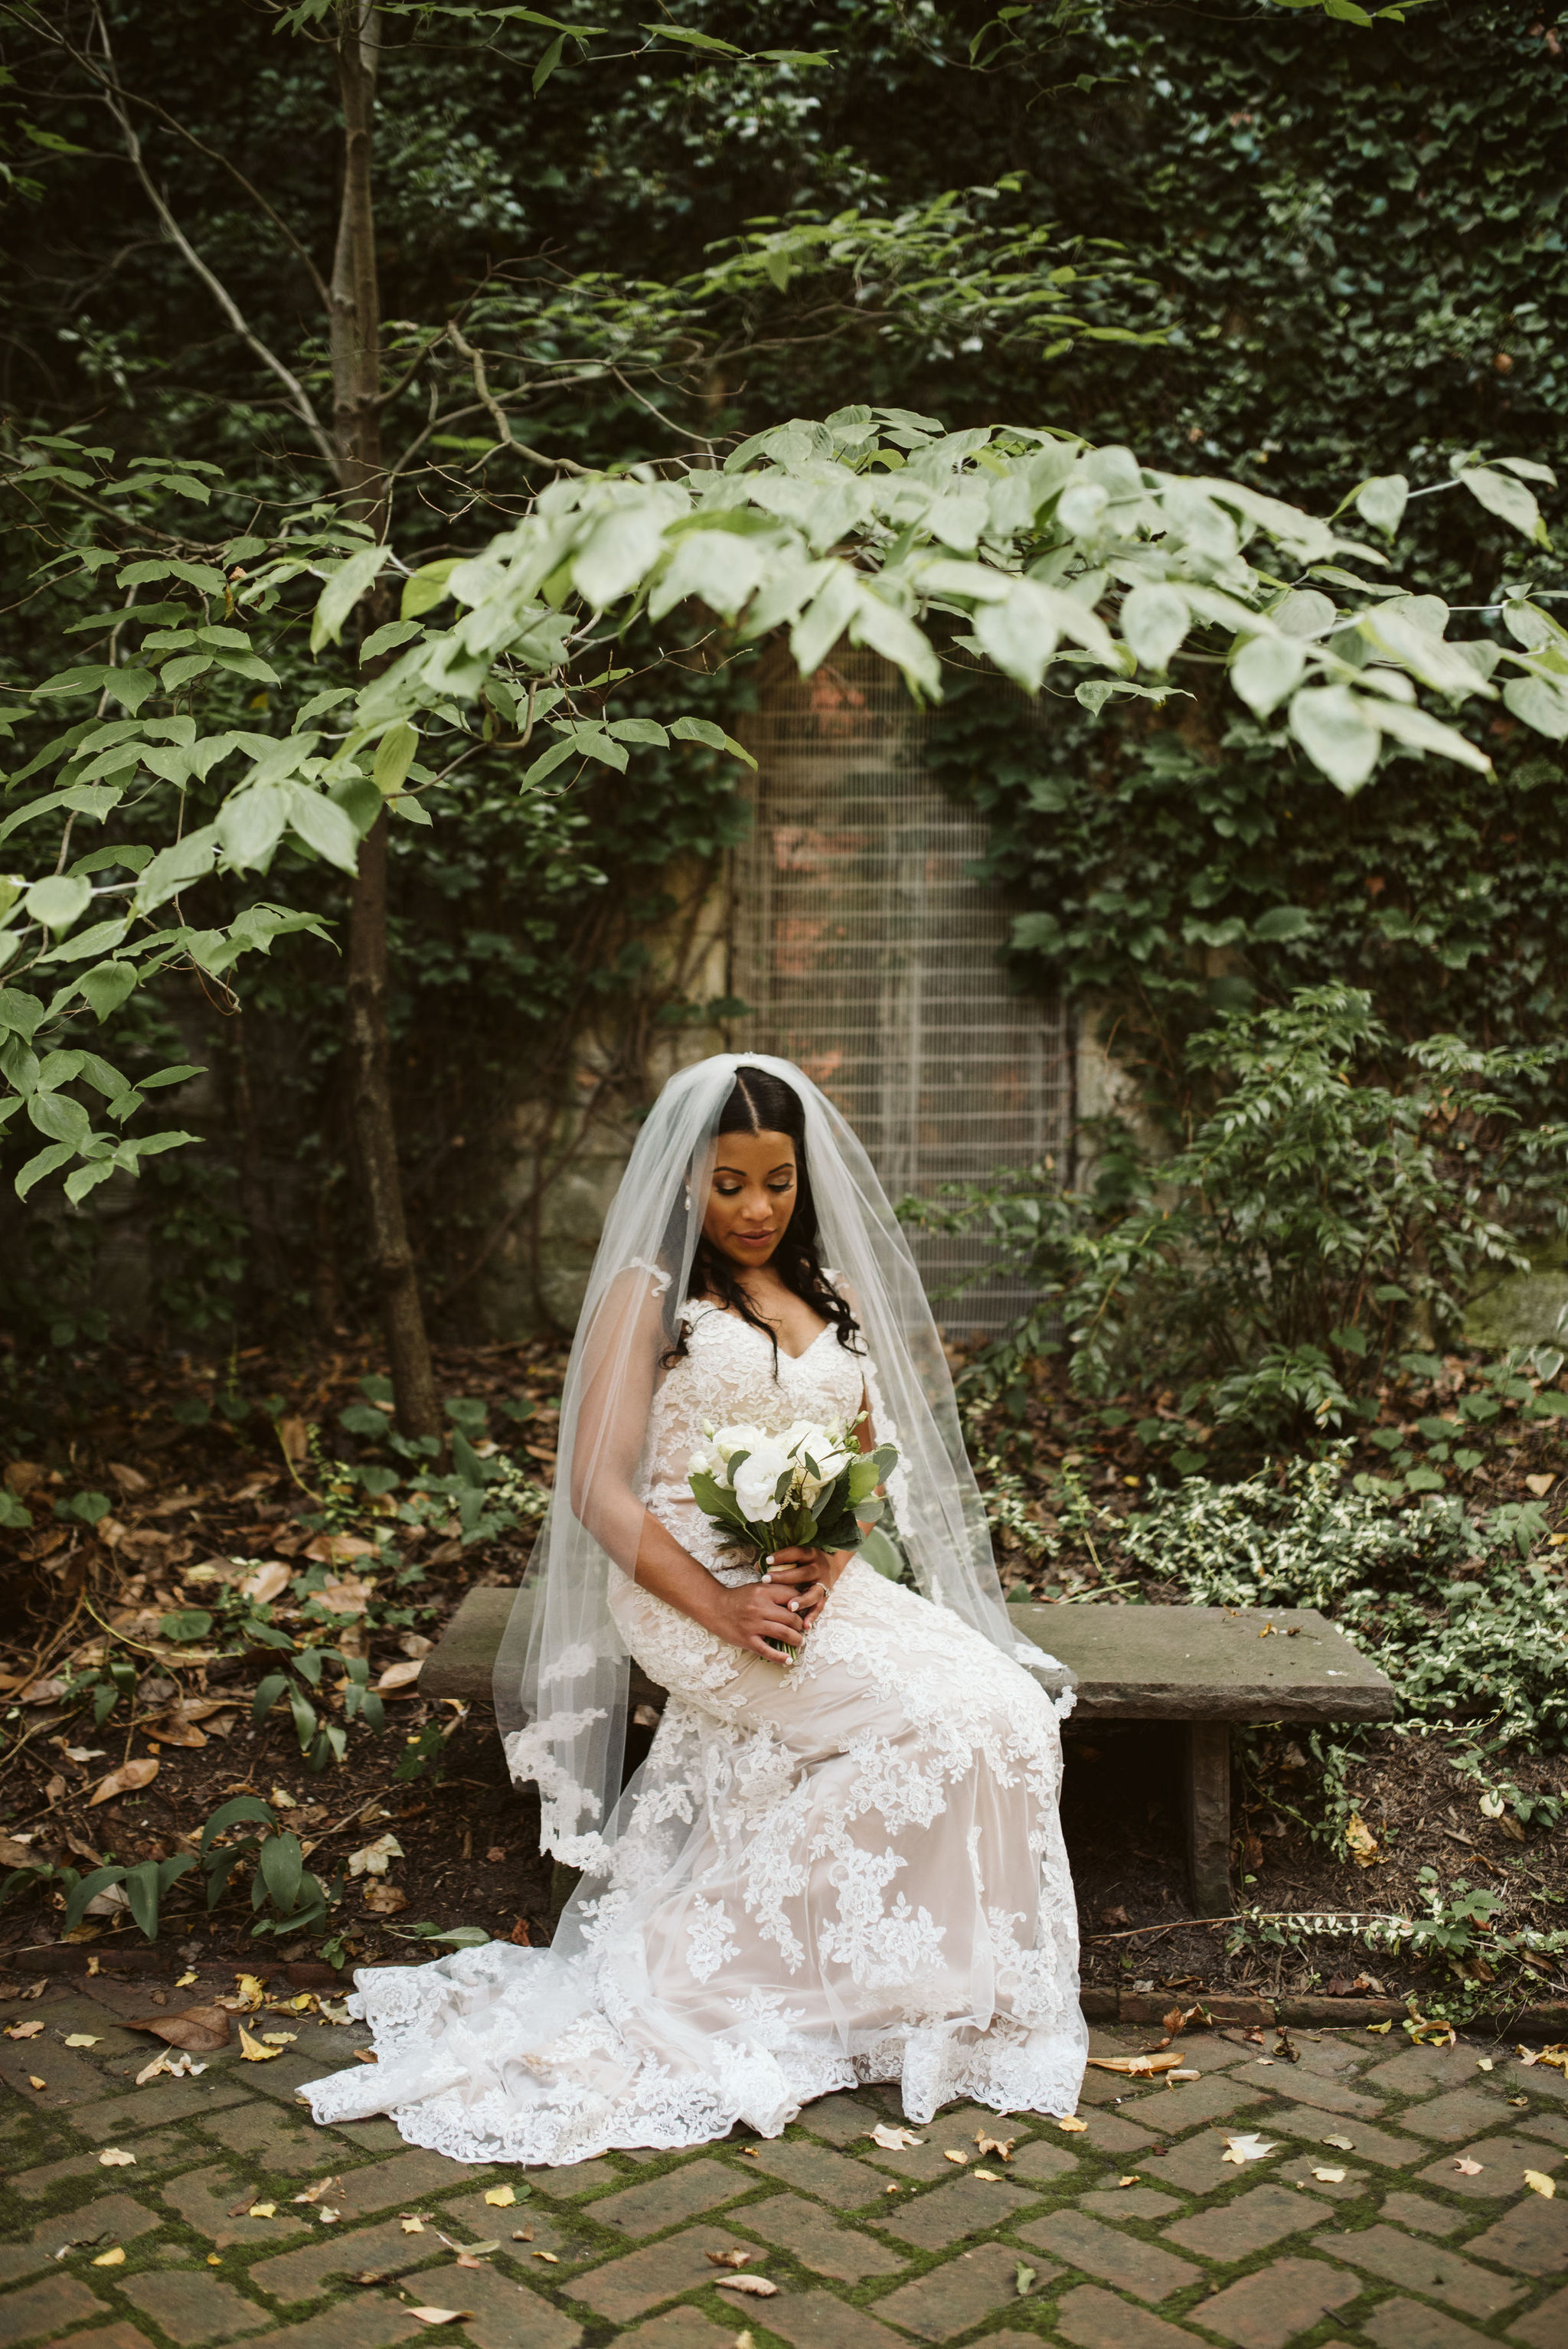  Baltimore, Maryland Wedding Photographer, Mount Vernon, Chase Court, Classic, Outdoor Ceremony, Garden, Romantic, Portrait of Bride Sitting in Garden 